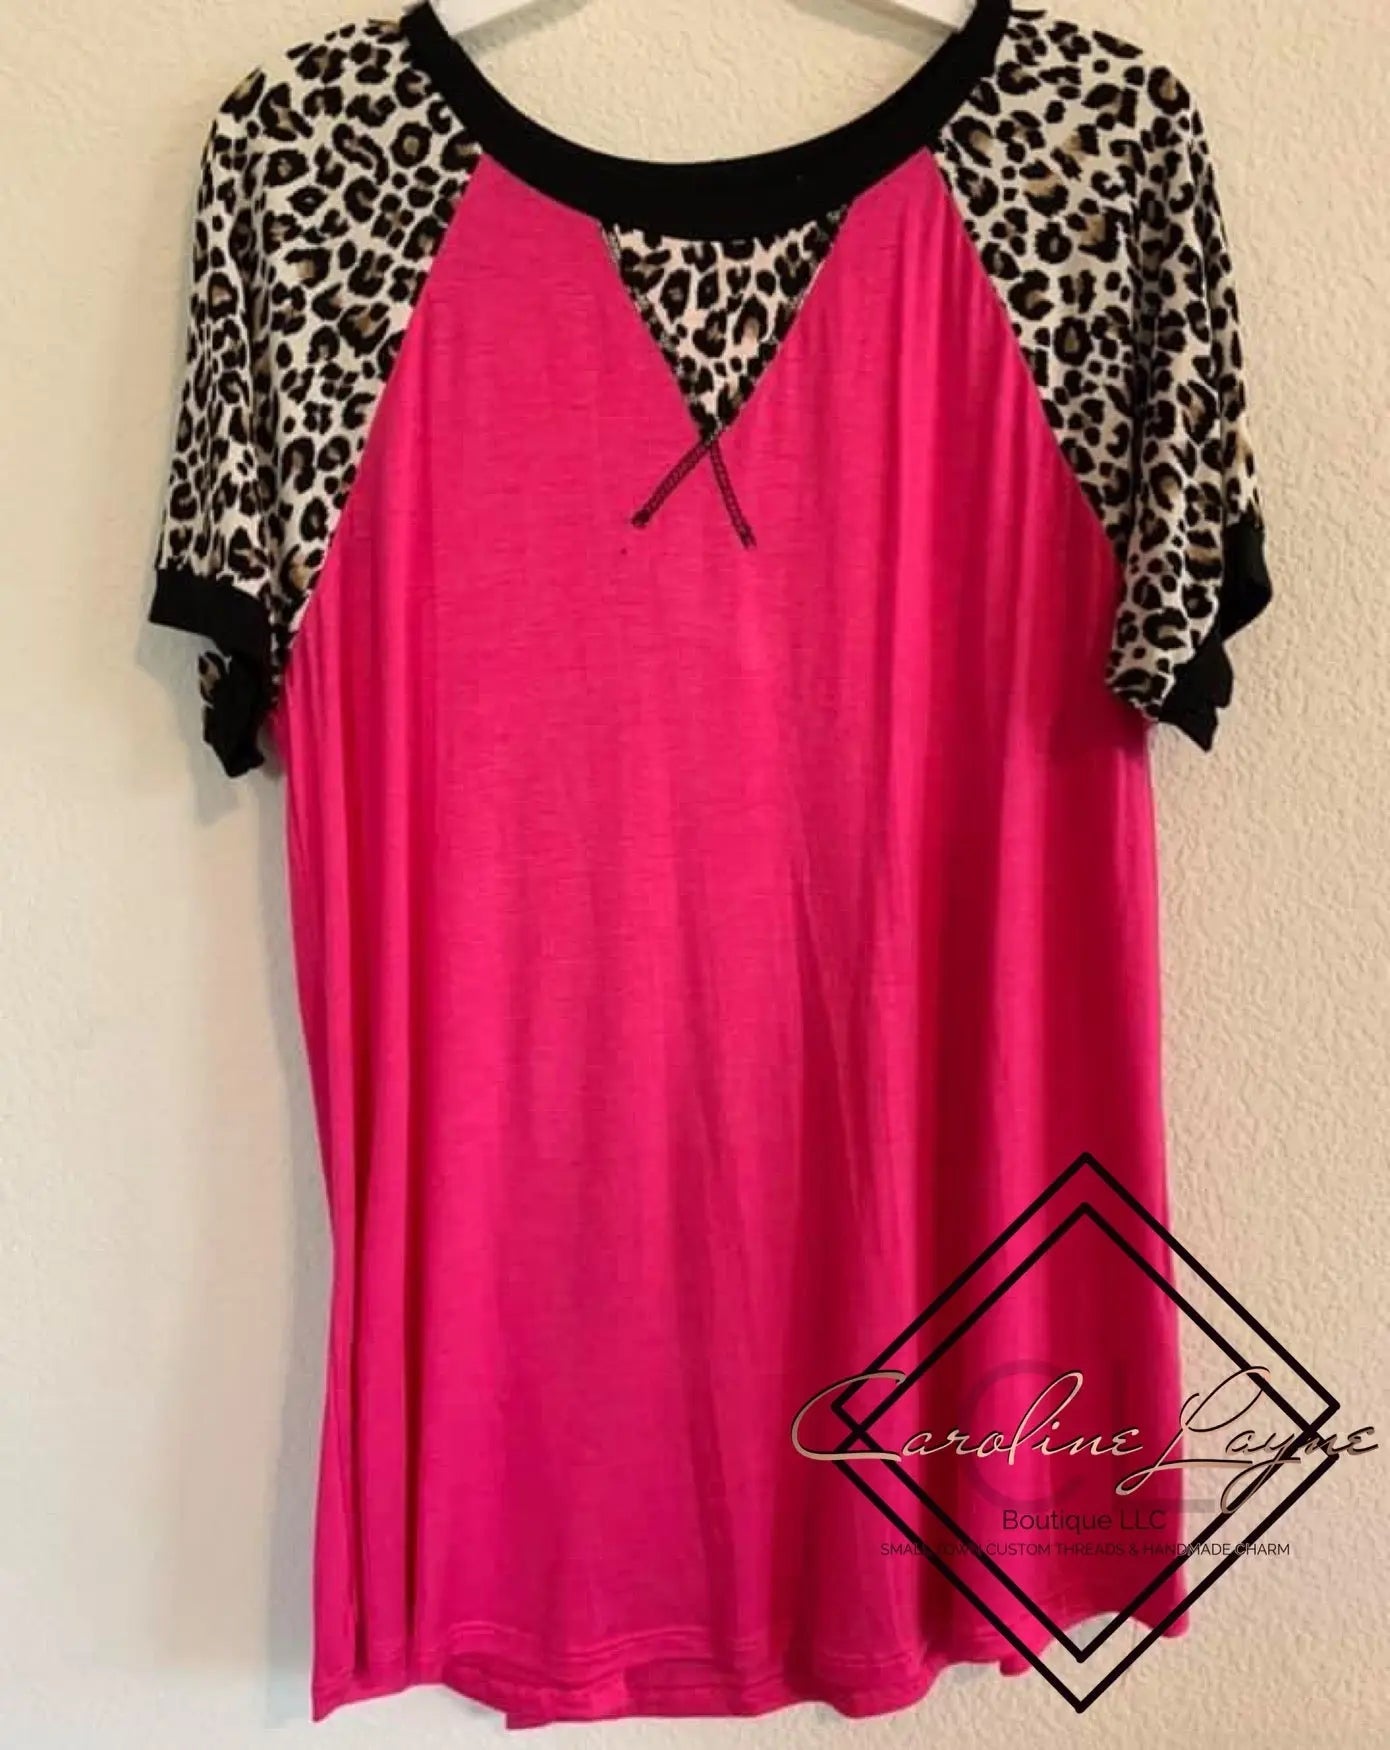 Leopard Hot Pink top - Caroline Layne Boutique LLC